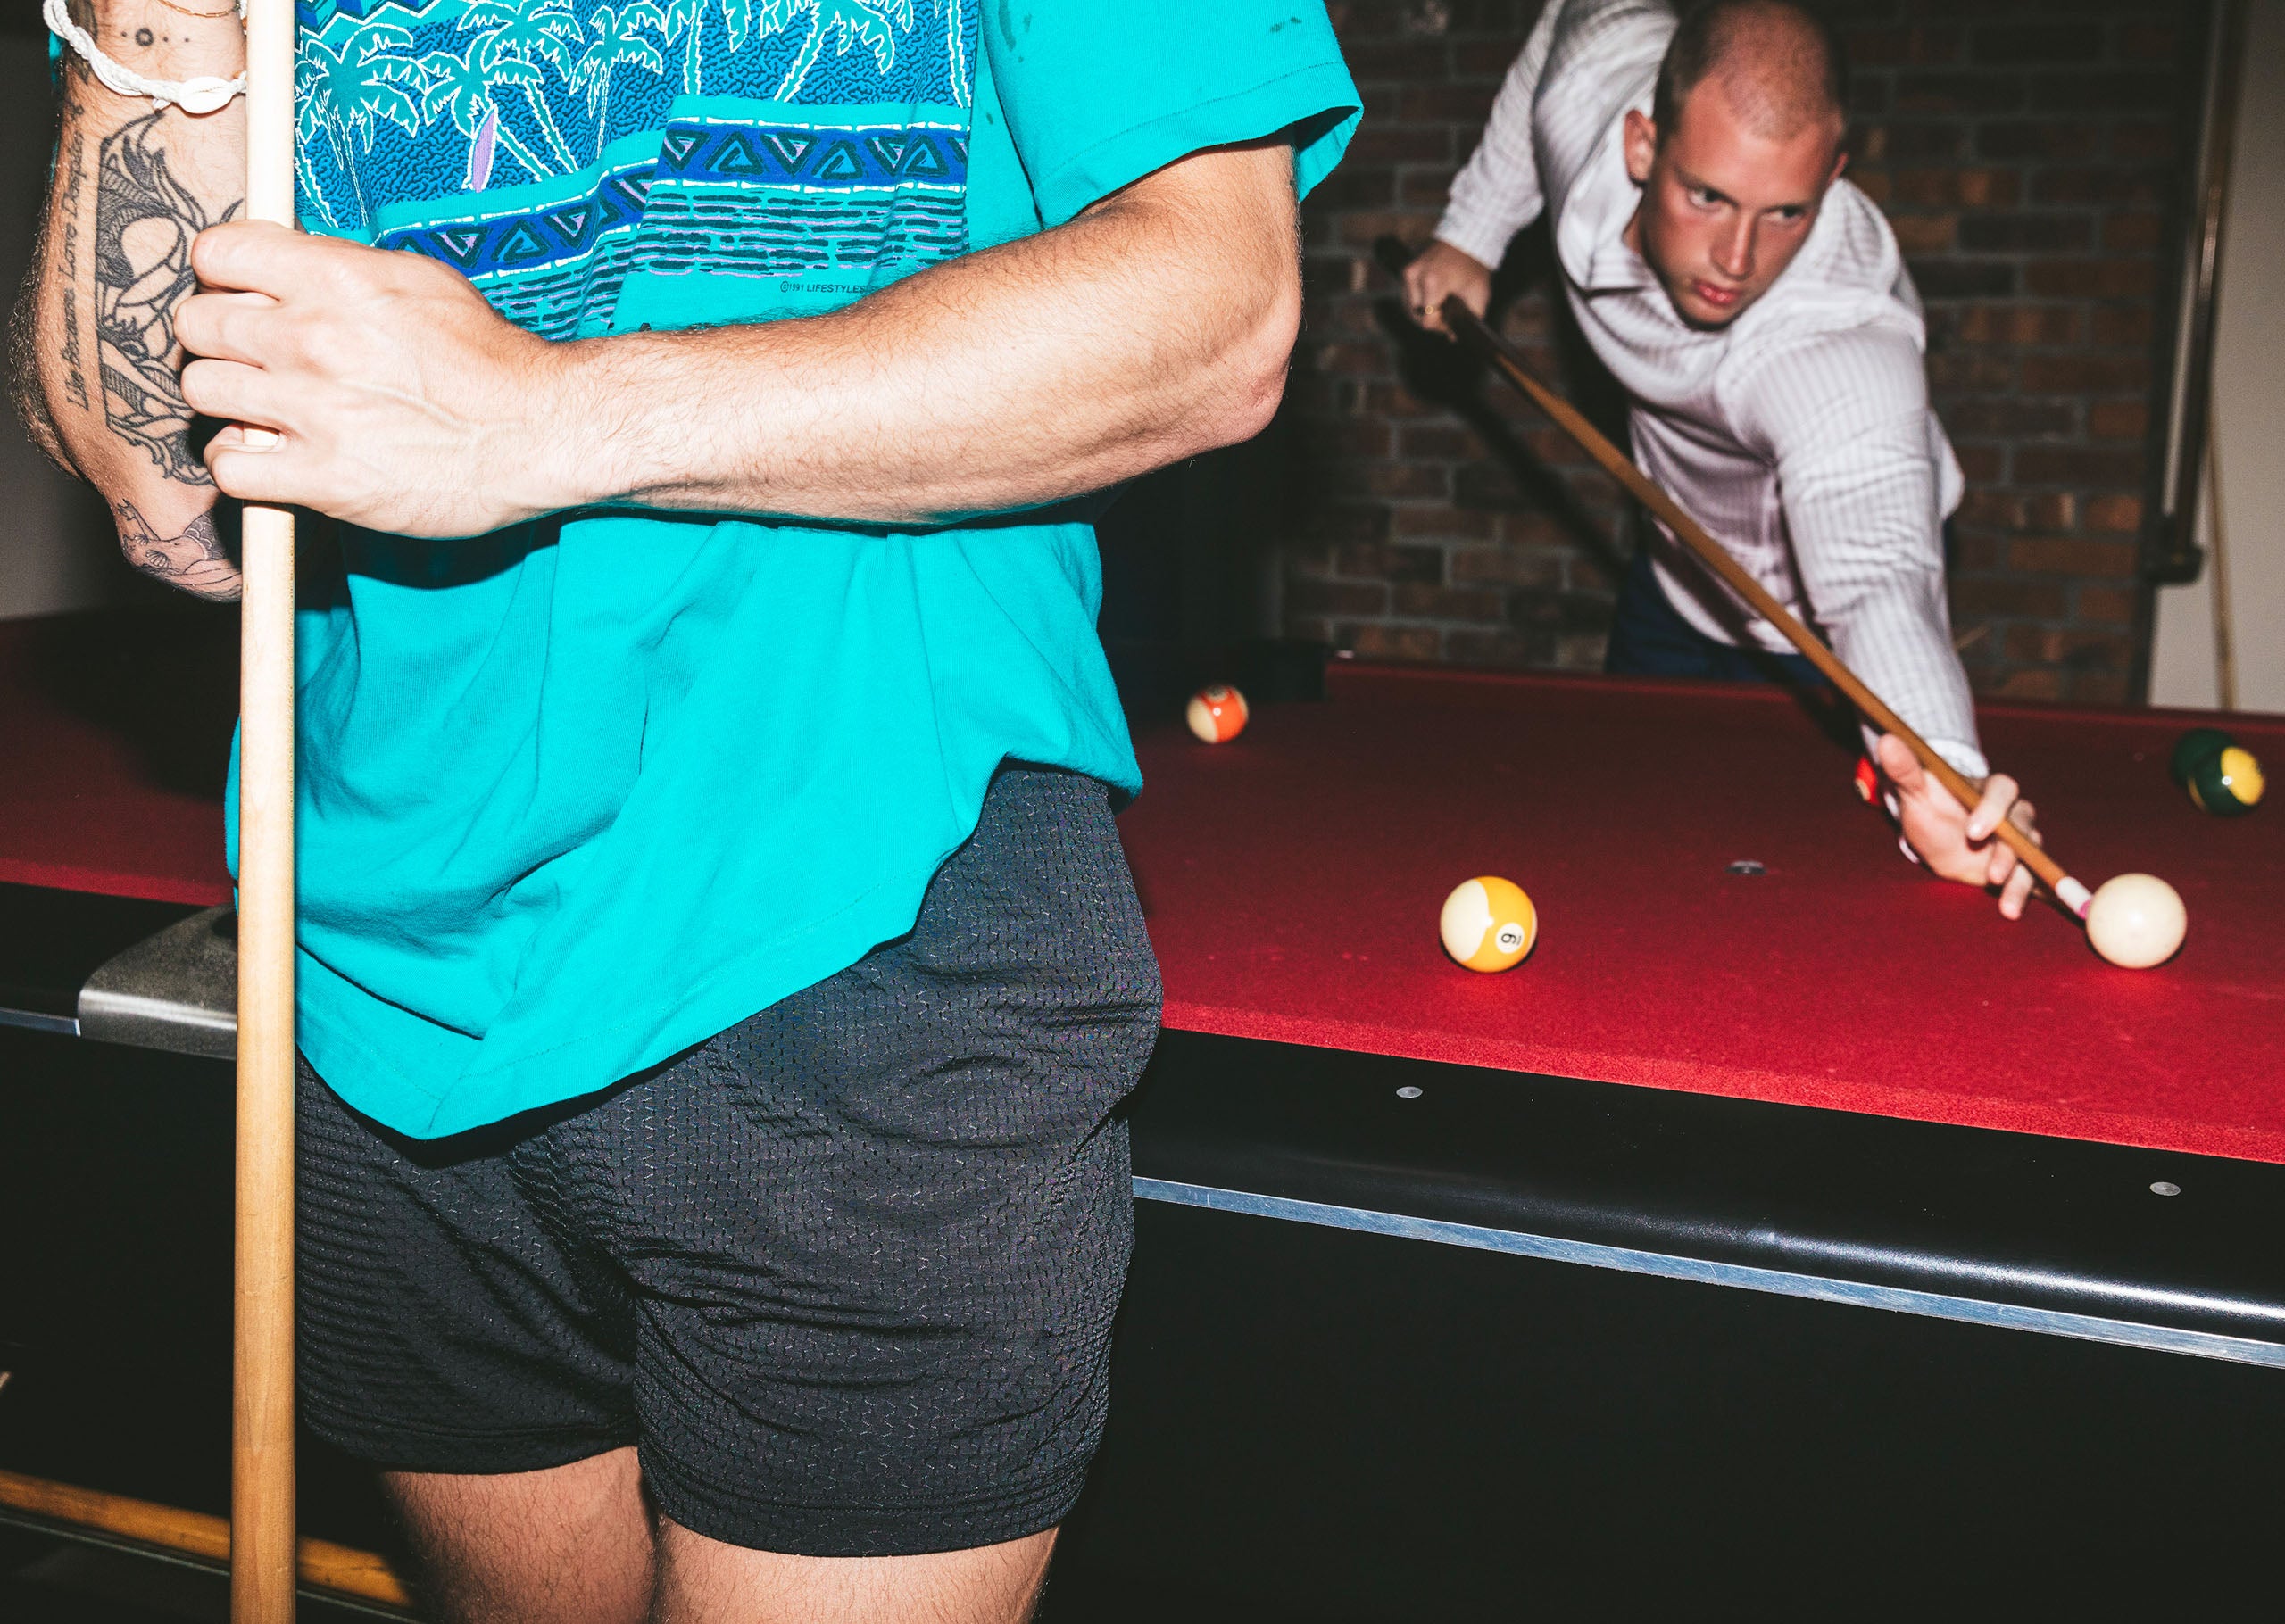 Two men playing pool with 1 man closeup wearing blue shirt and black mesh shorts.